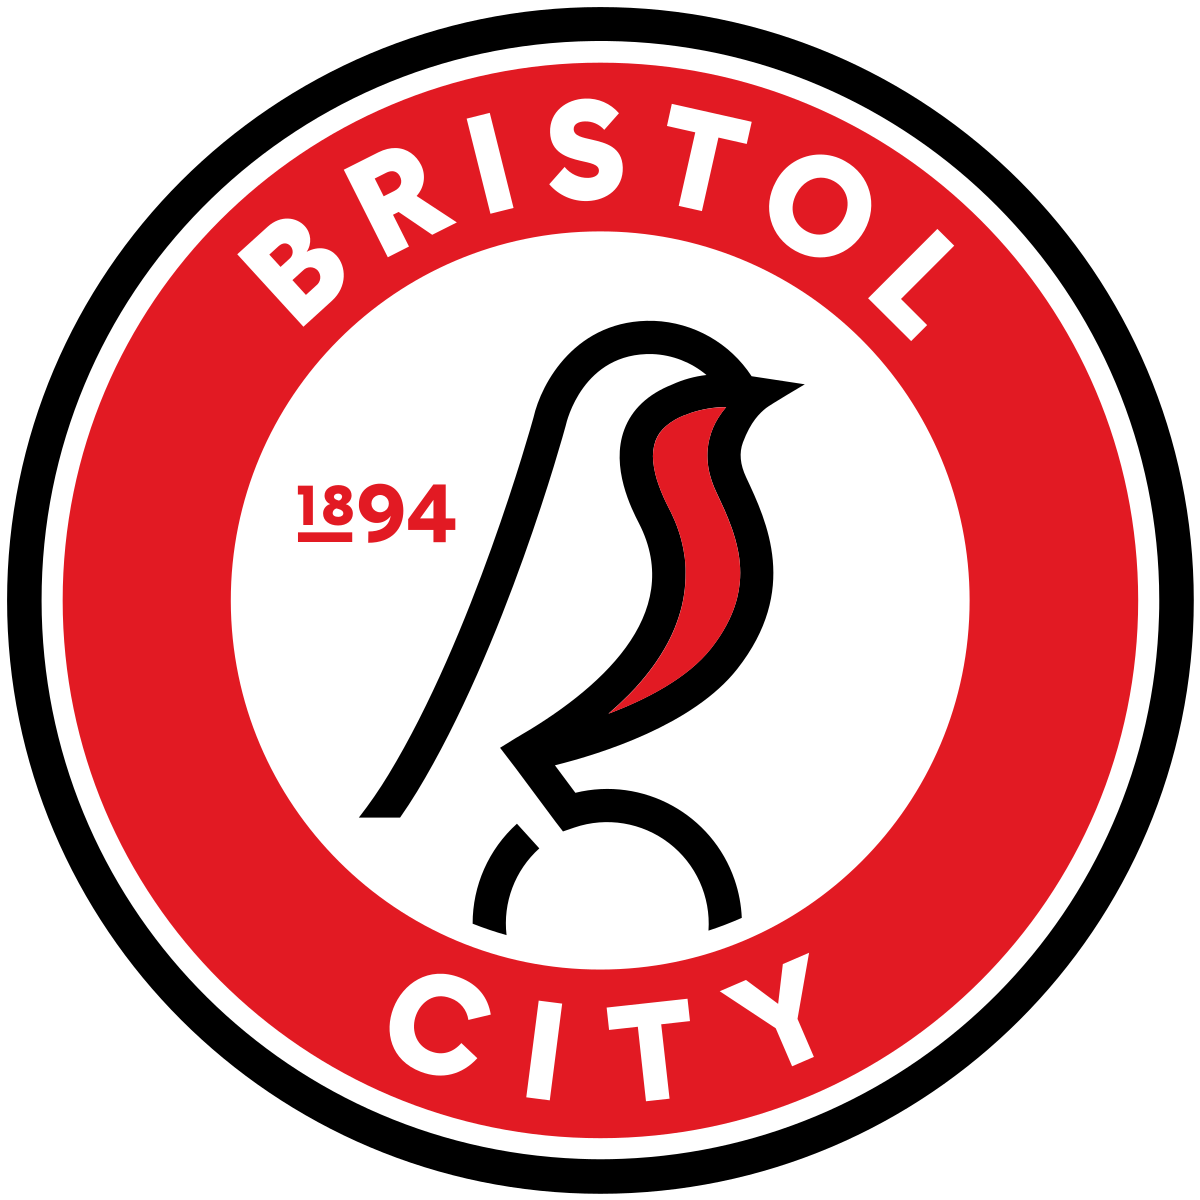 Bristol City v Swansea City - Hospitality